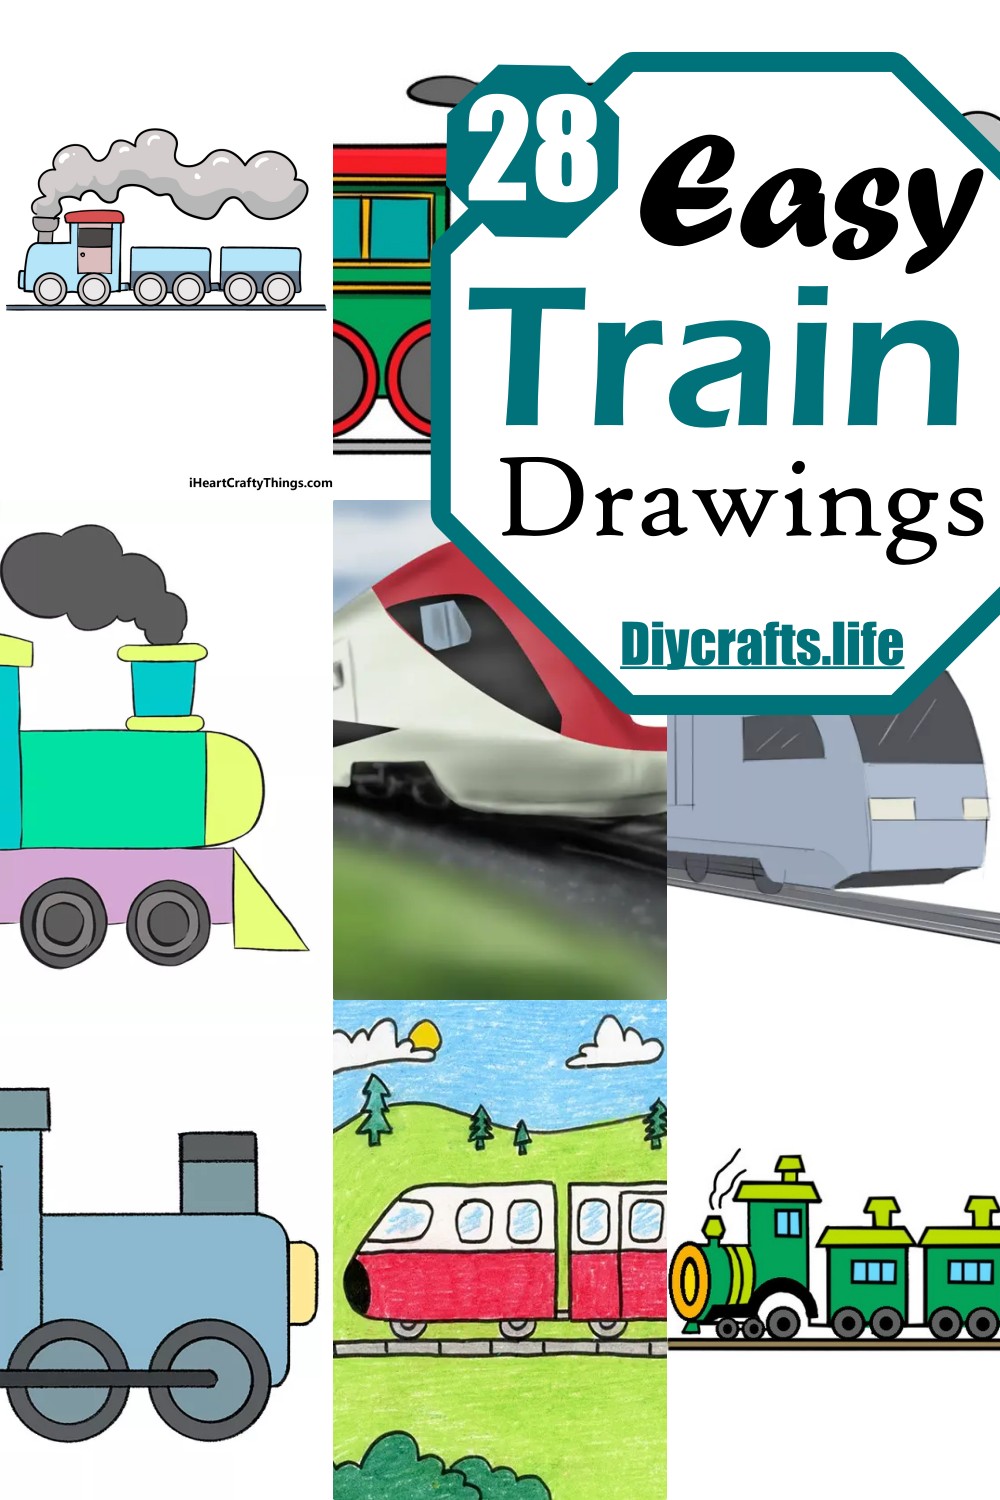 Easy Train Drawings